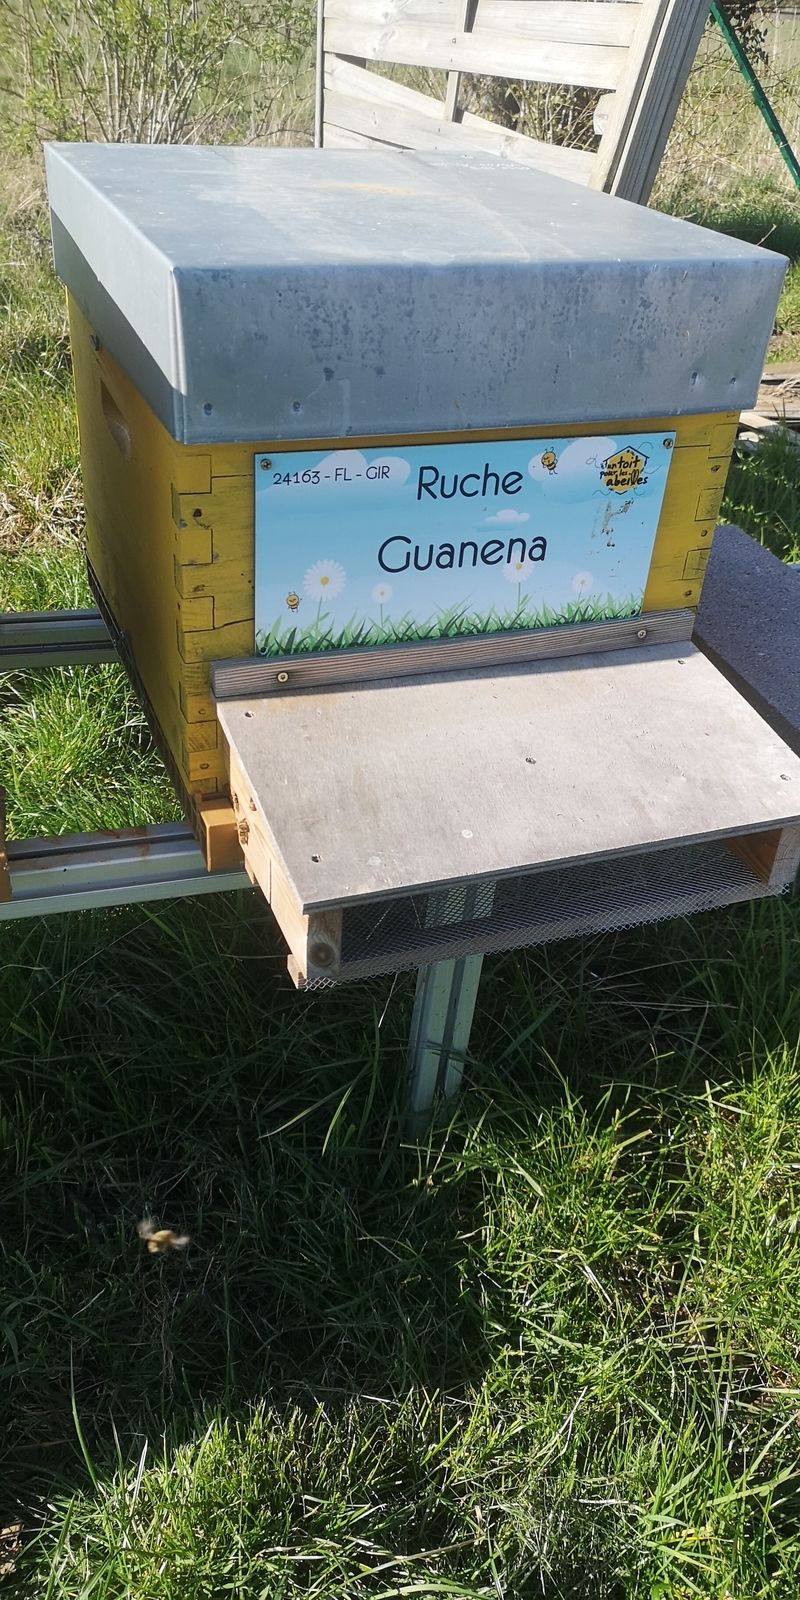 La ruche Guanena